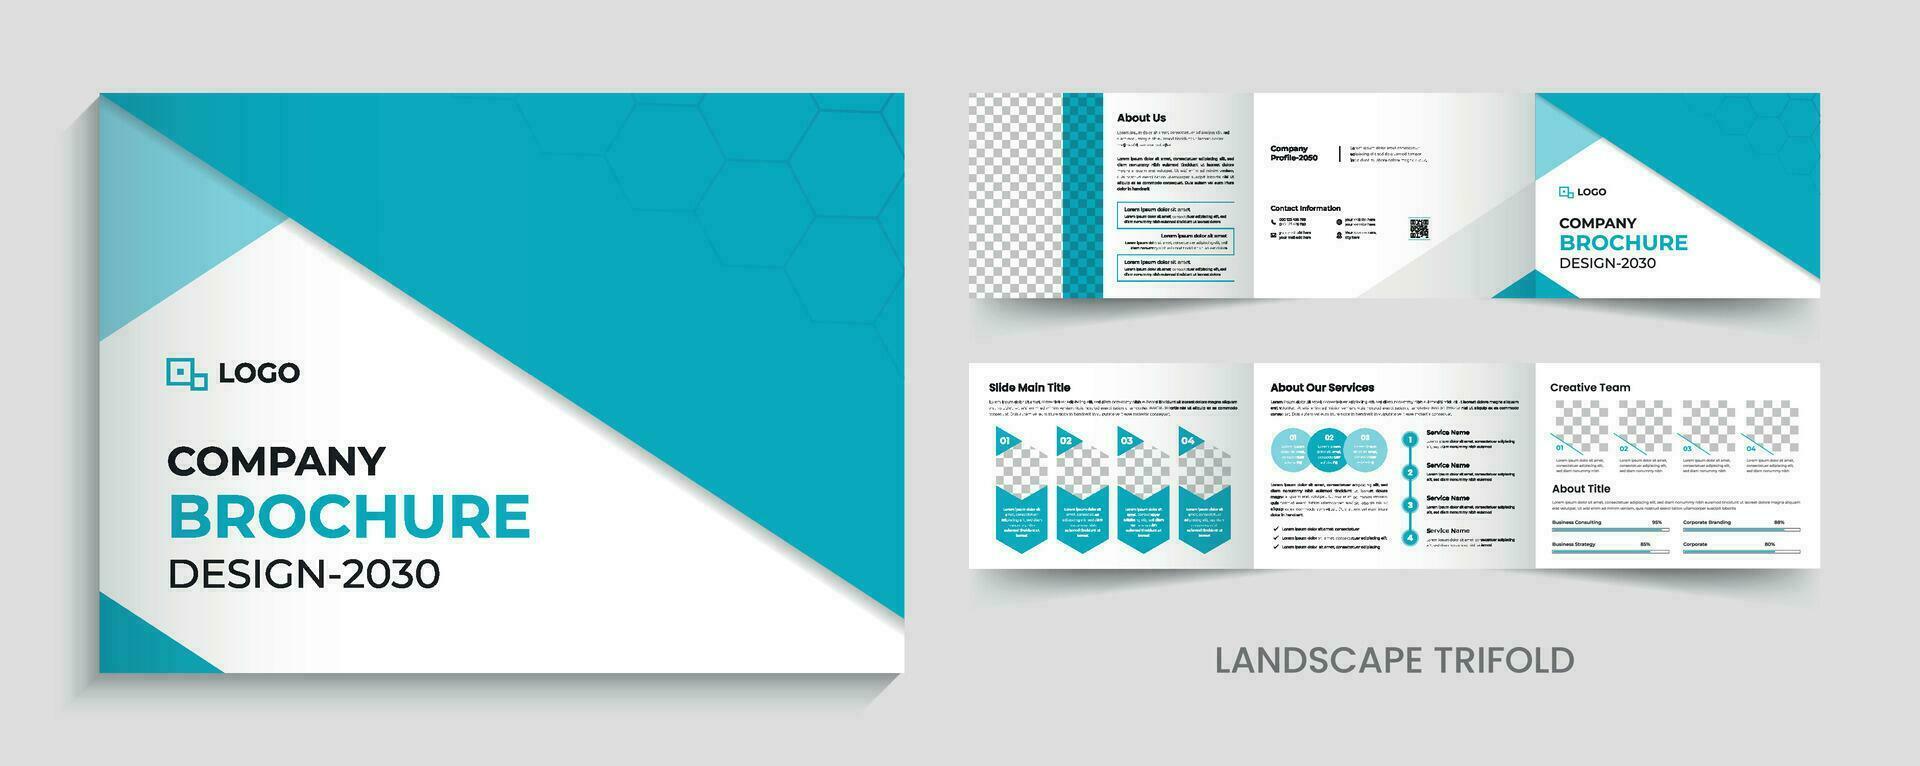 negocio paisaje tríptico folleto diseño, corporativo empresa modelo diseño vector